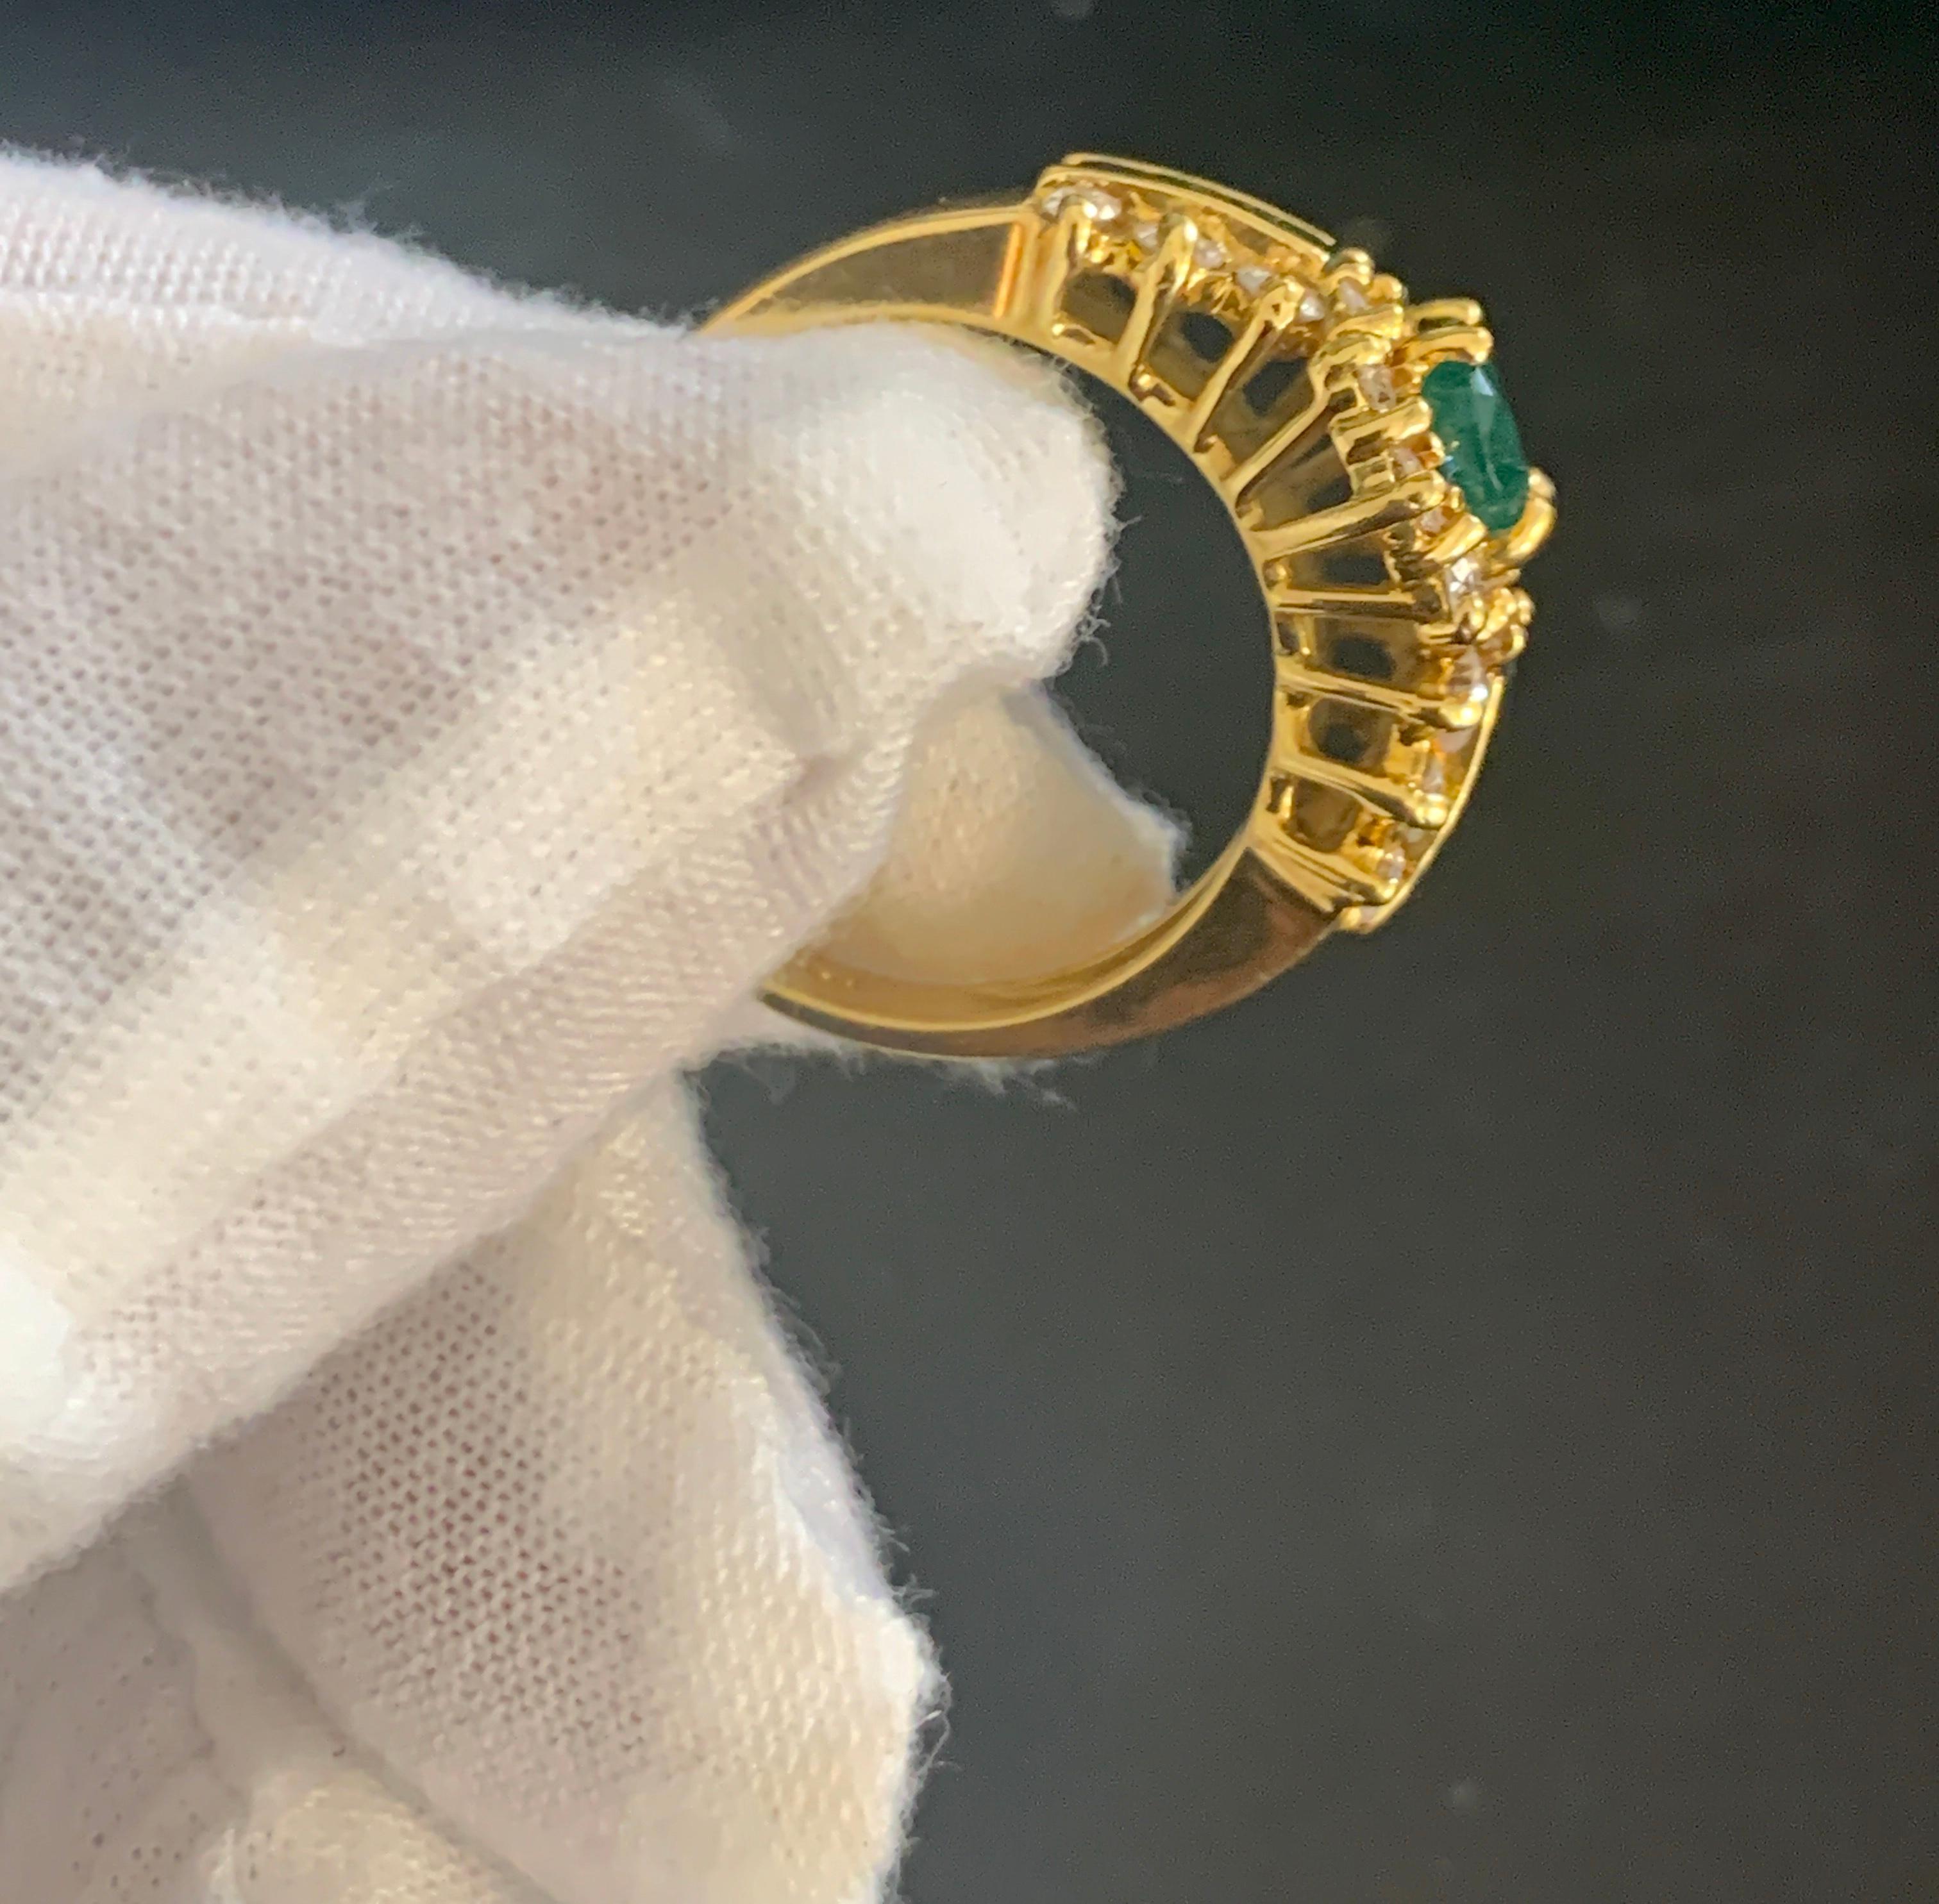 1 Carat Oval Cut Emerald and 1.0 Carat Diamond Ring 18 Karat Yellow Gold For Sale 2